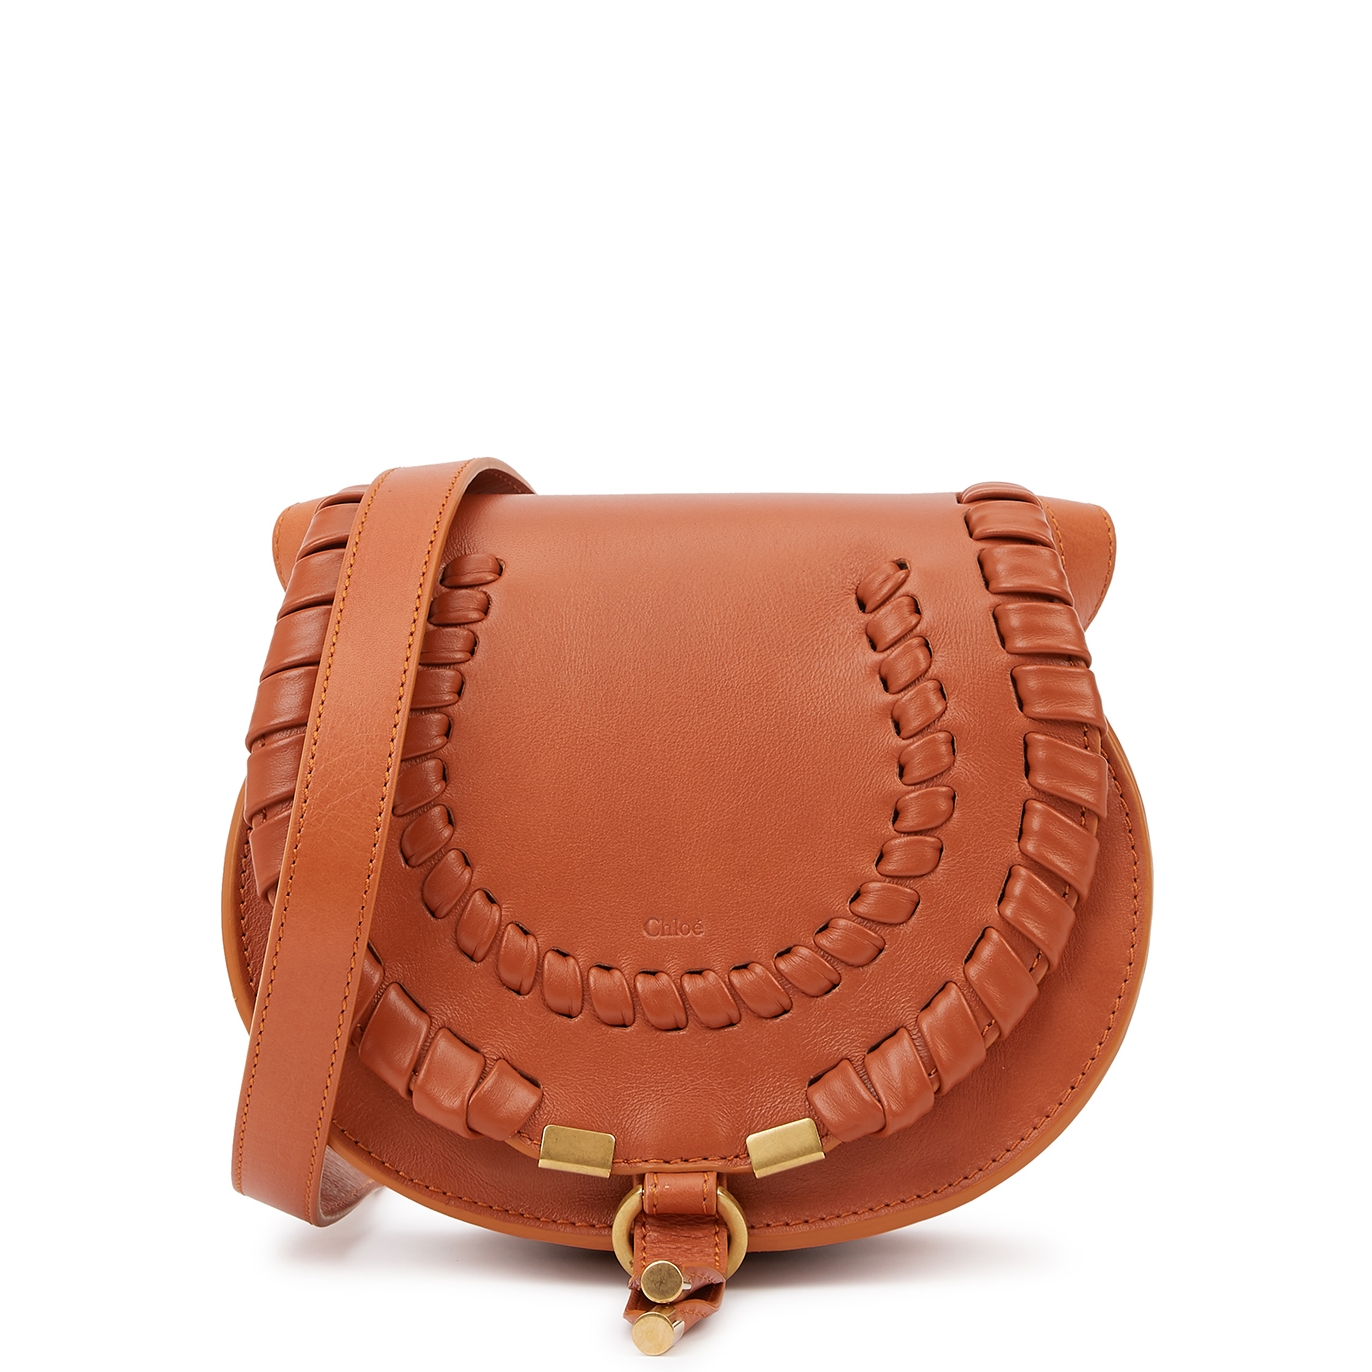 Chloé Marcie Small Terracotta Leather Saddle Bag - TAN